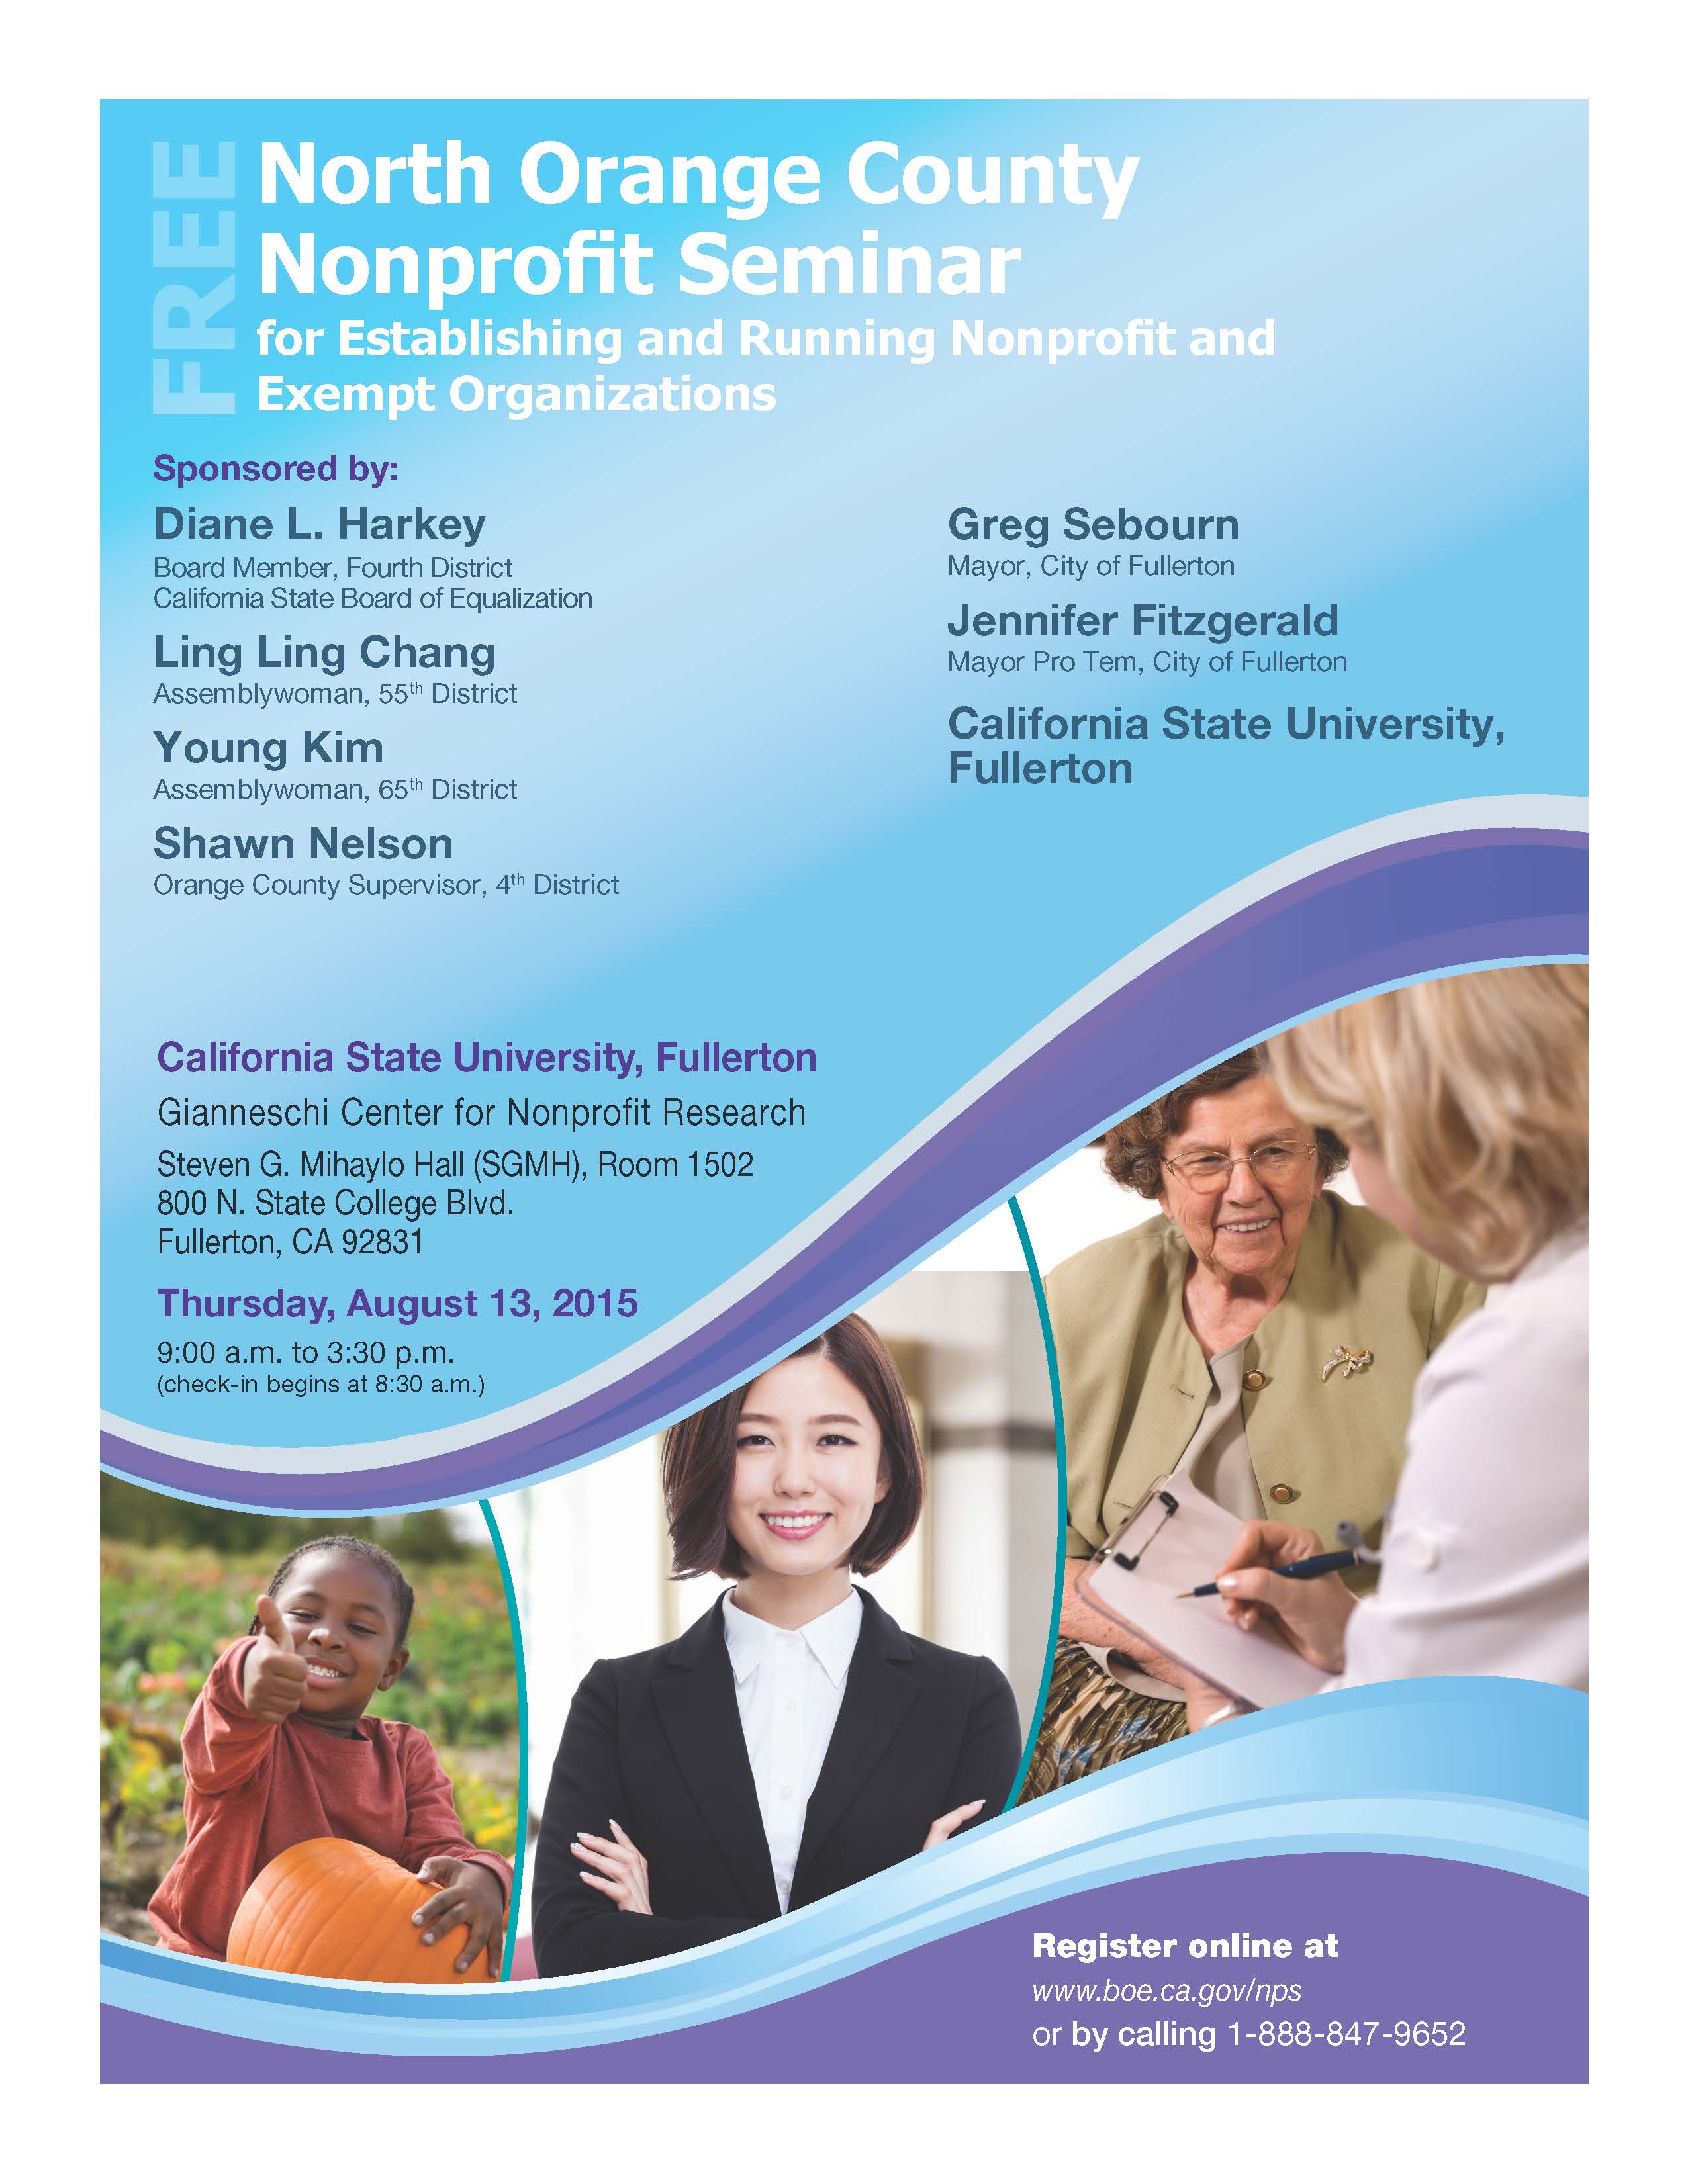 Nonprofit Seminar for Establishing and Running Nonprofits and Exempt Organizations